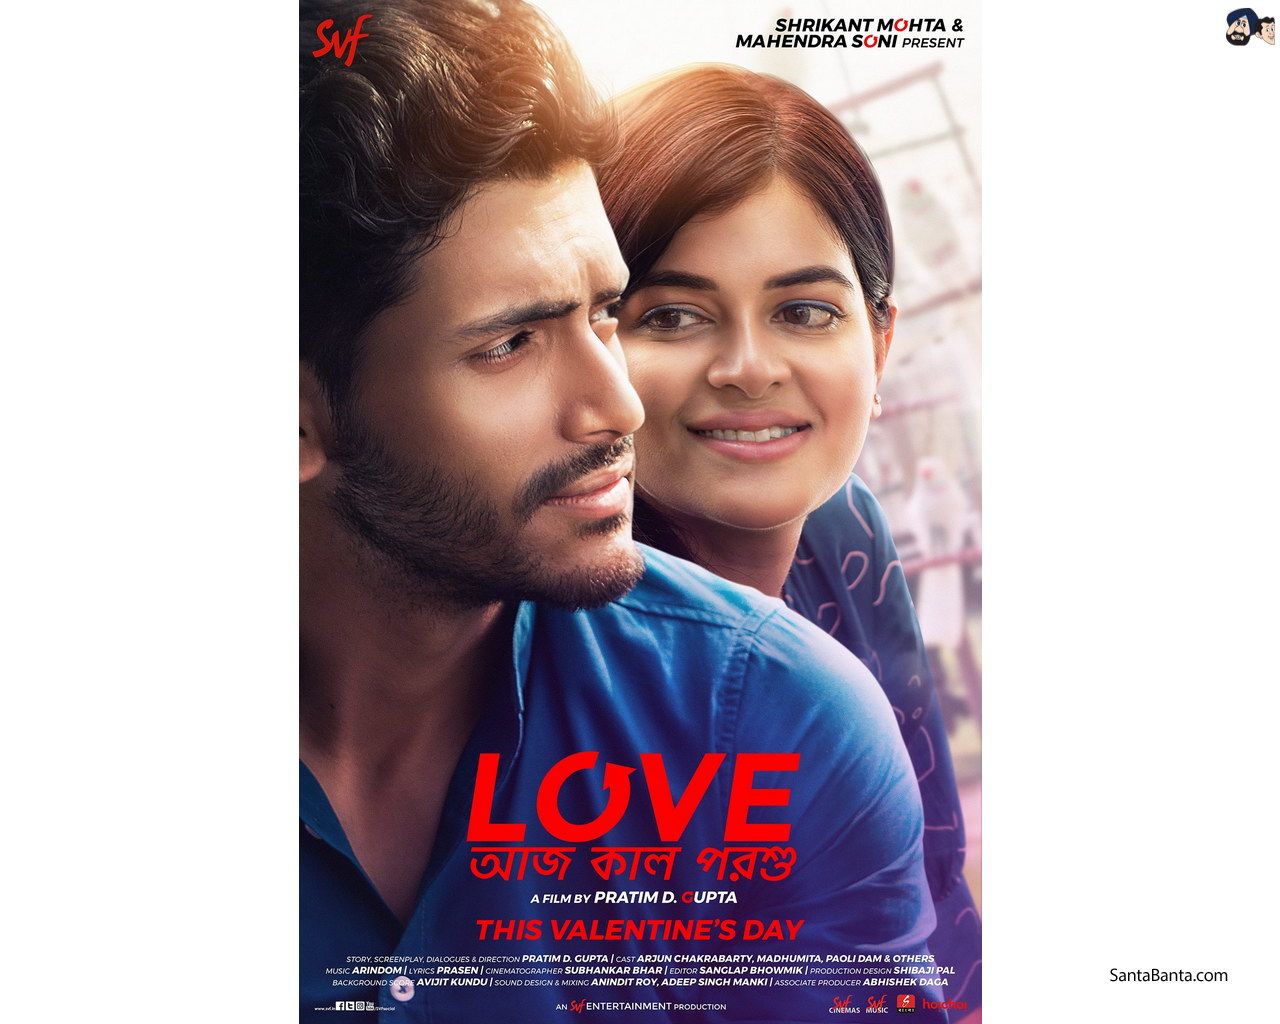 Pratim D. Gupta`s Bengali romantic film `Love Aaj Kal Porshu